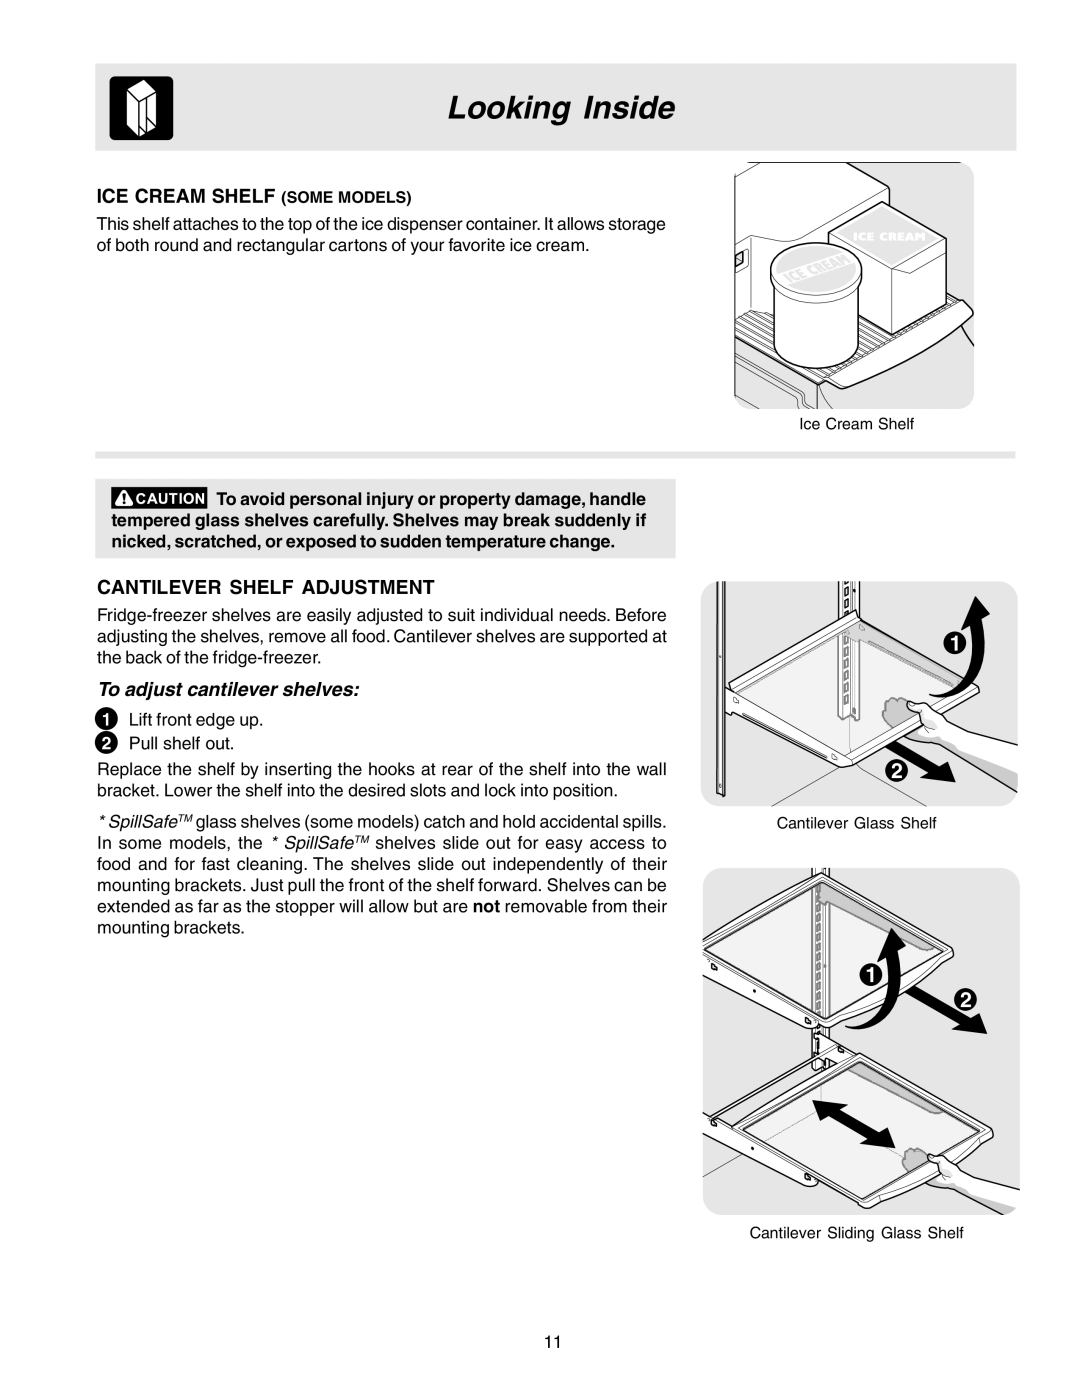 Electrolux U27107 manual Looking Inside, Ice Cream Shelf Some Models, Cantilever Shelf Adjustment 